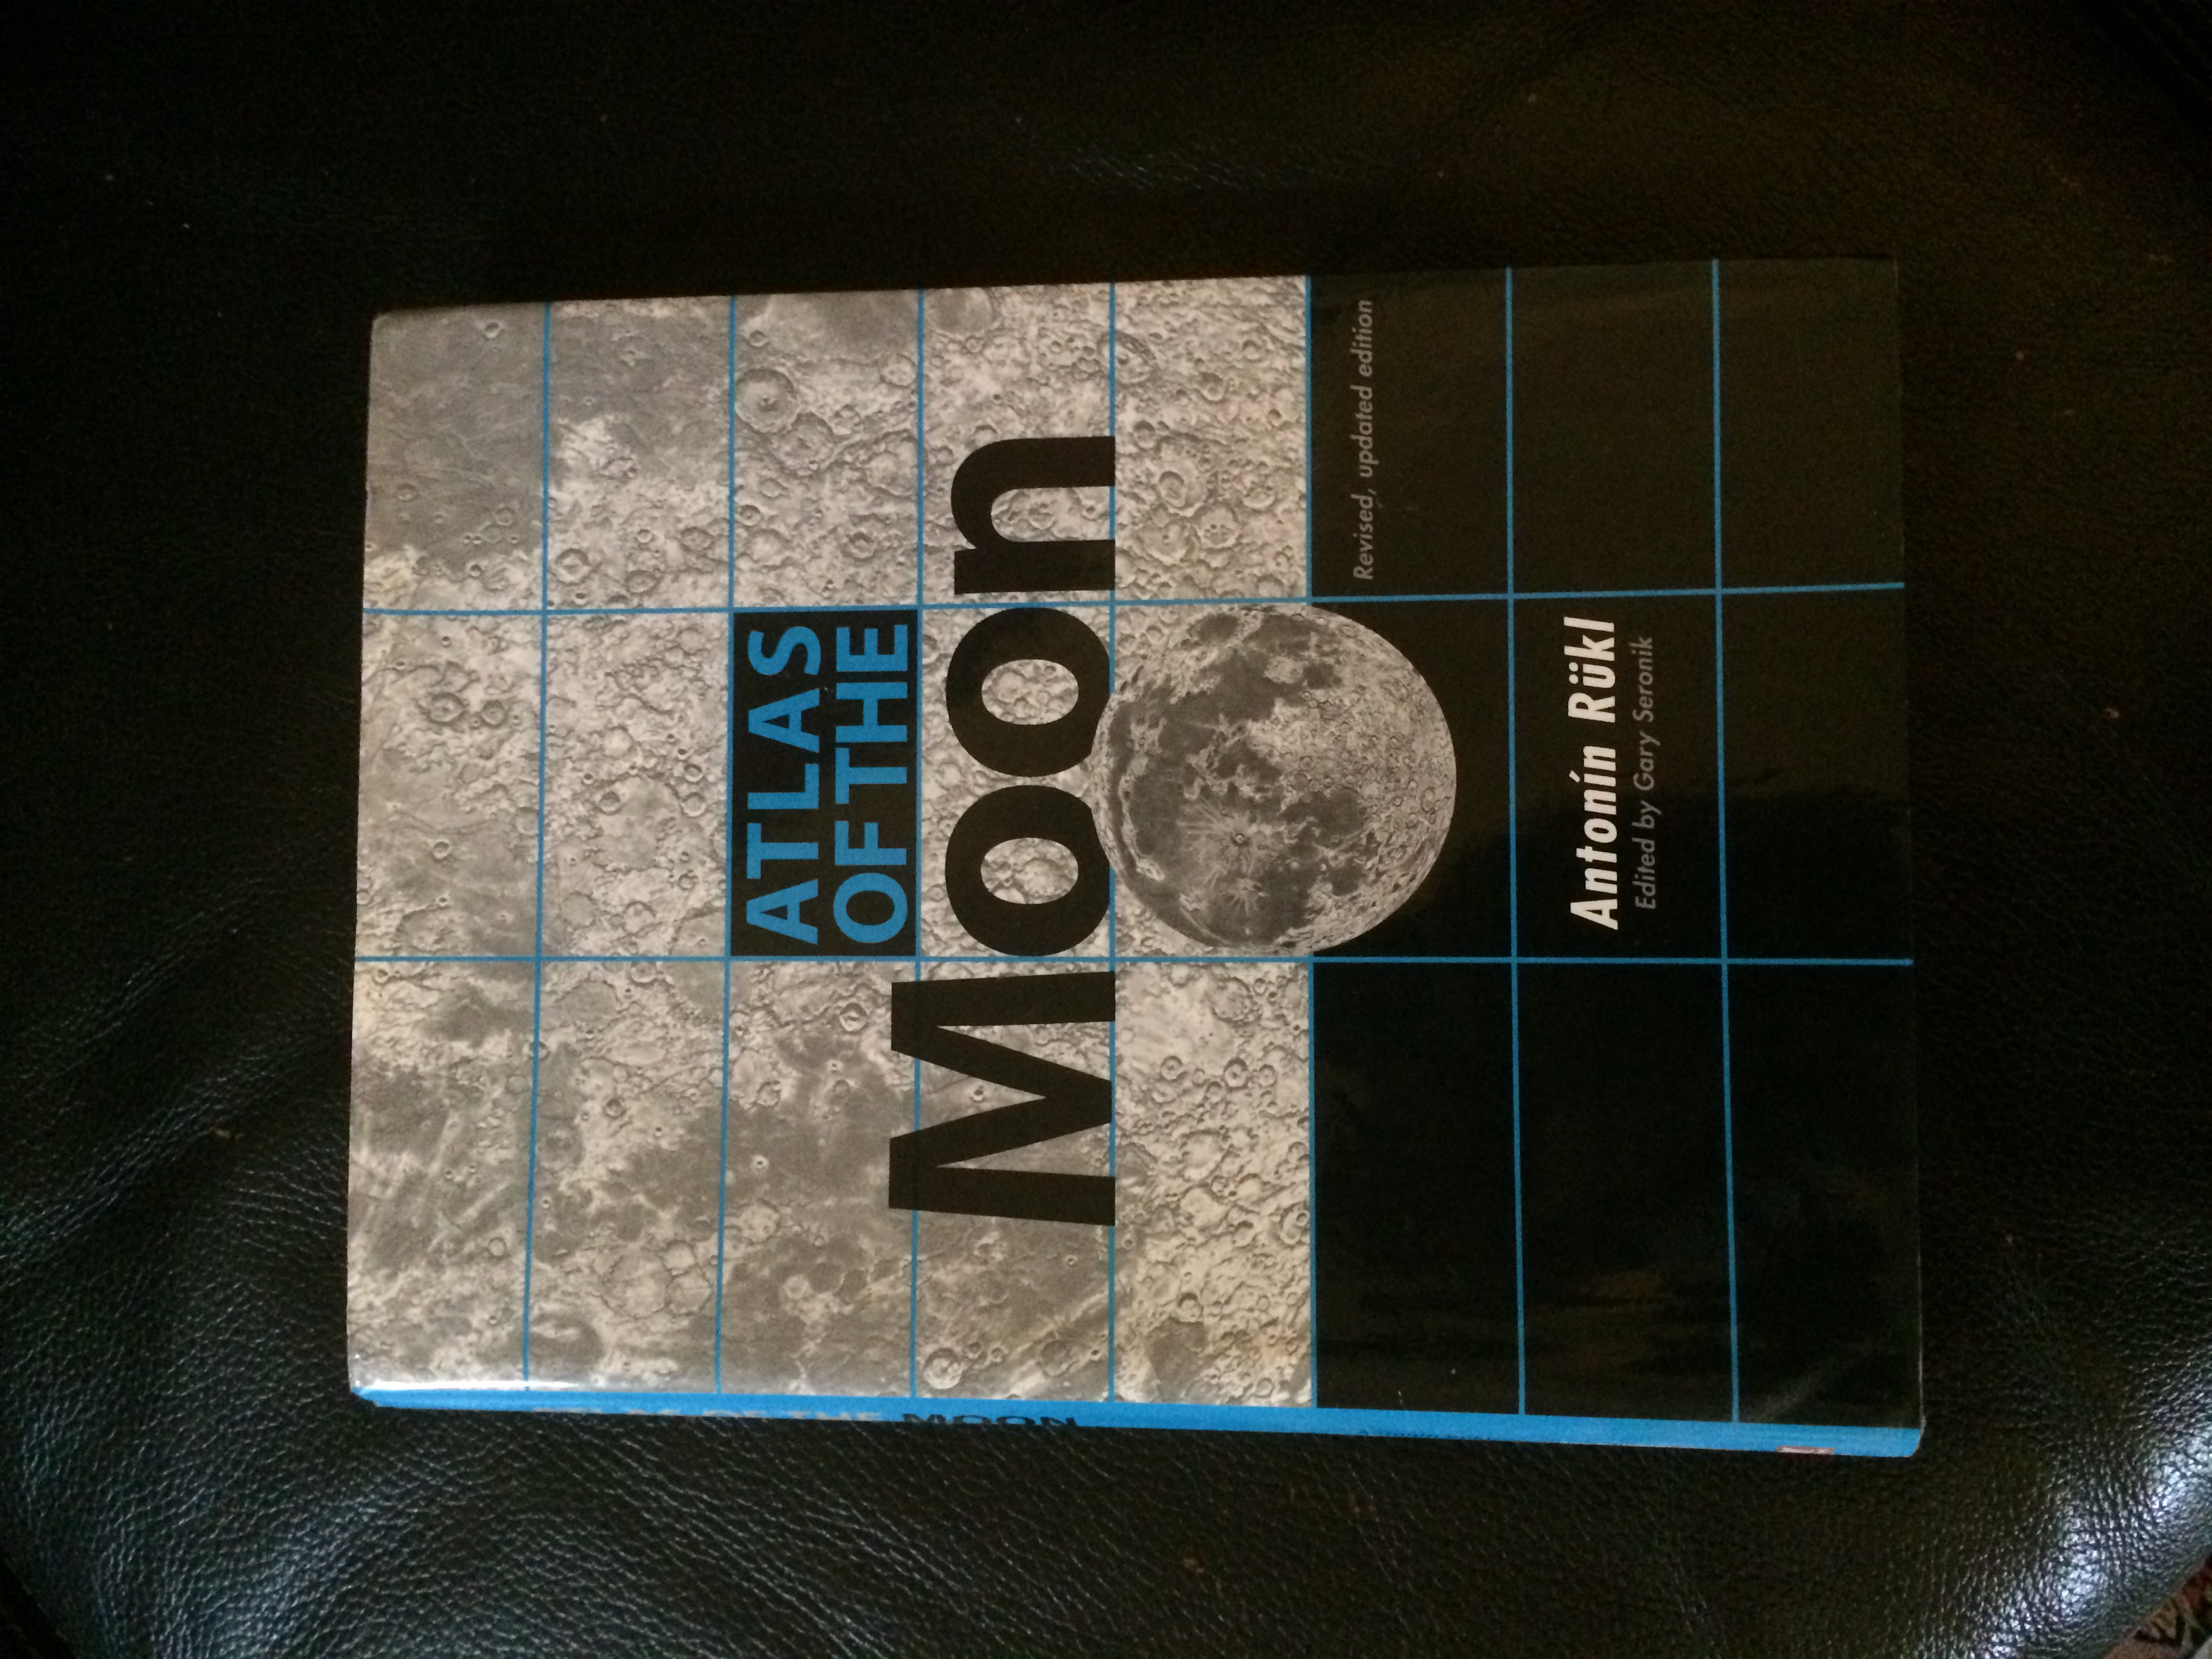 lunar 100 virtual moon atlas